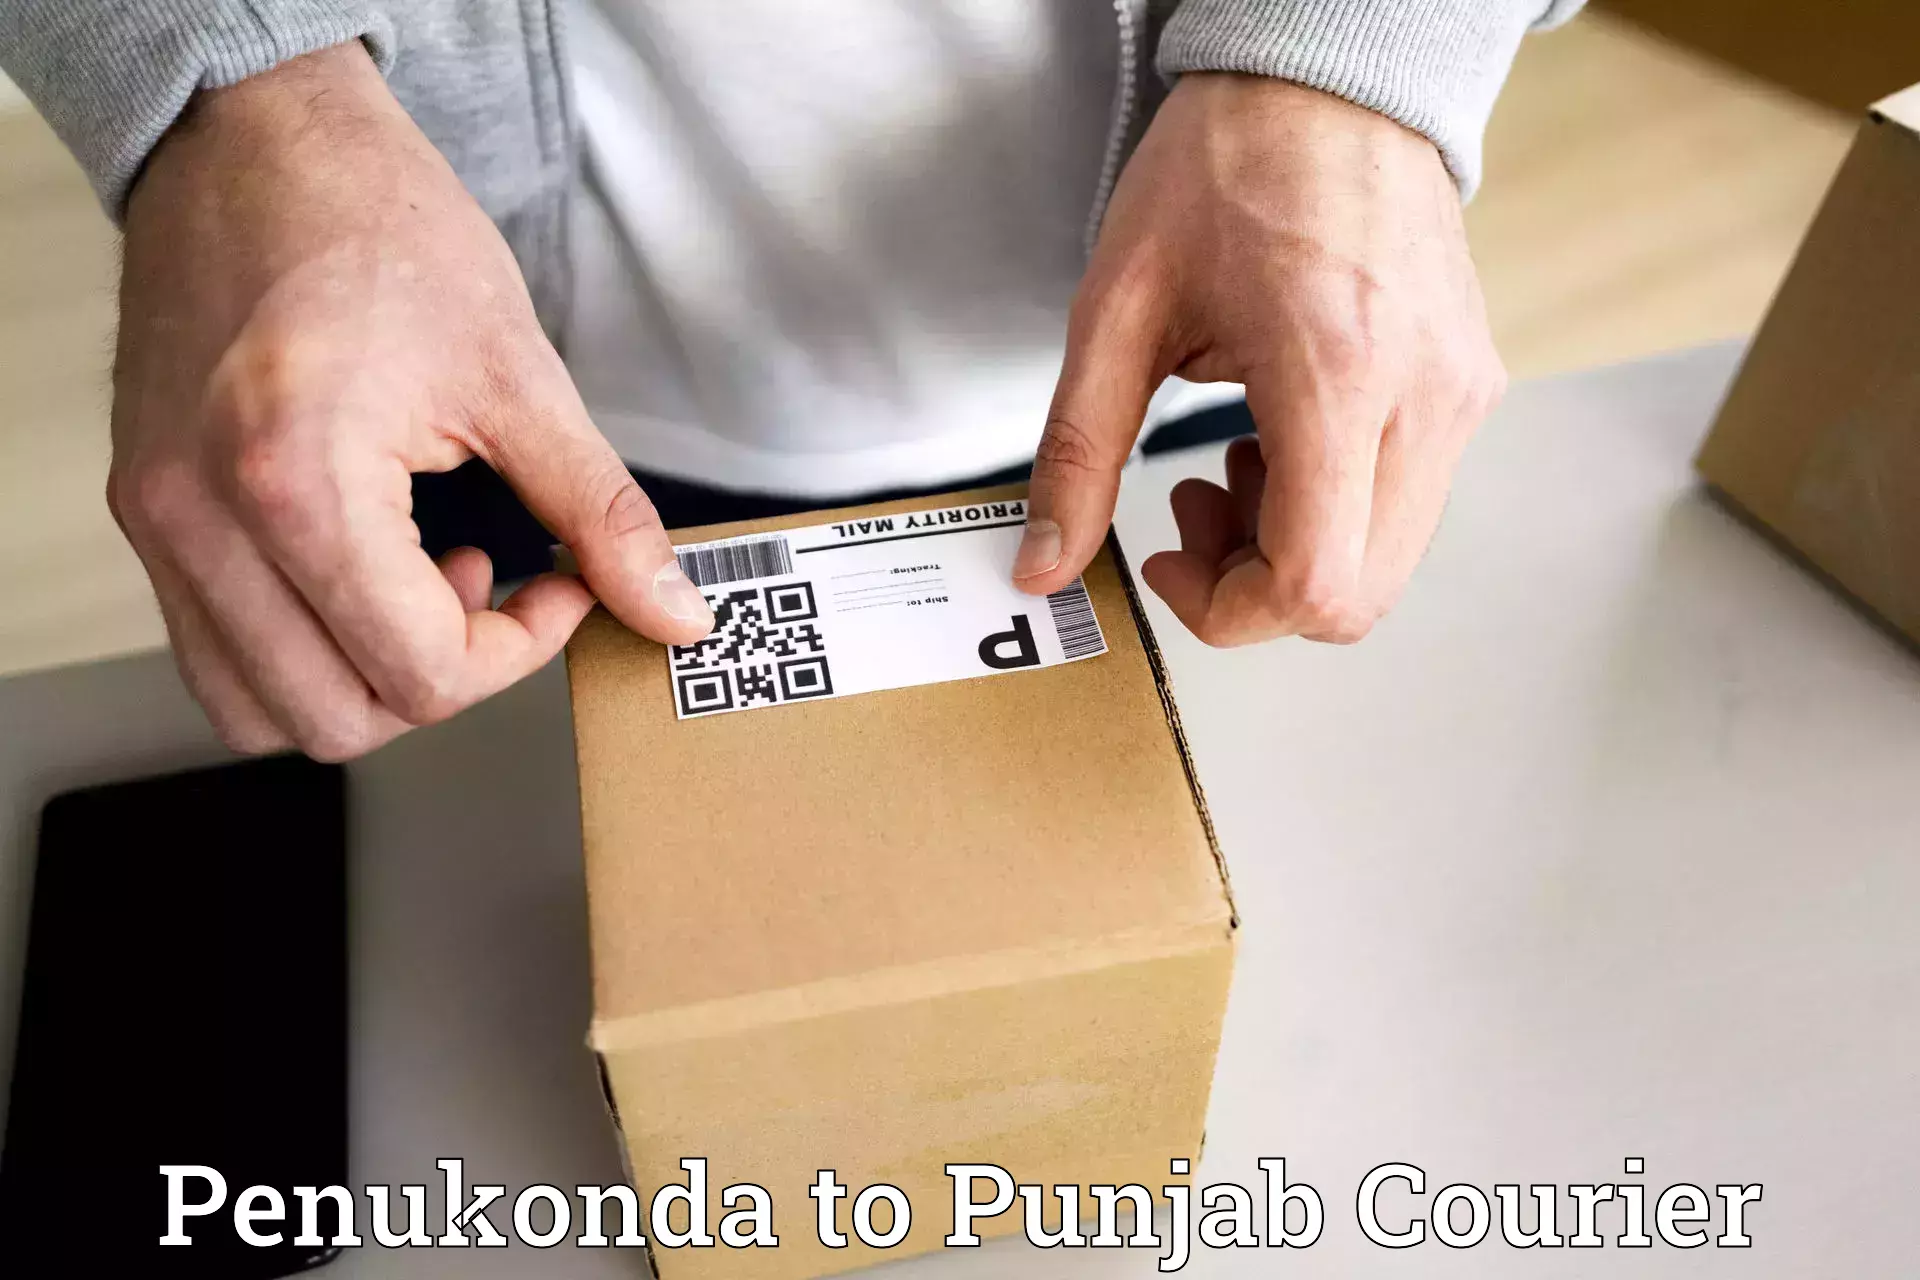 Efficient parcel tracking Penukonda to Punjab